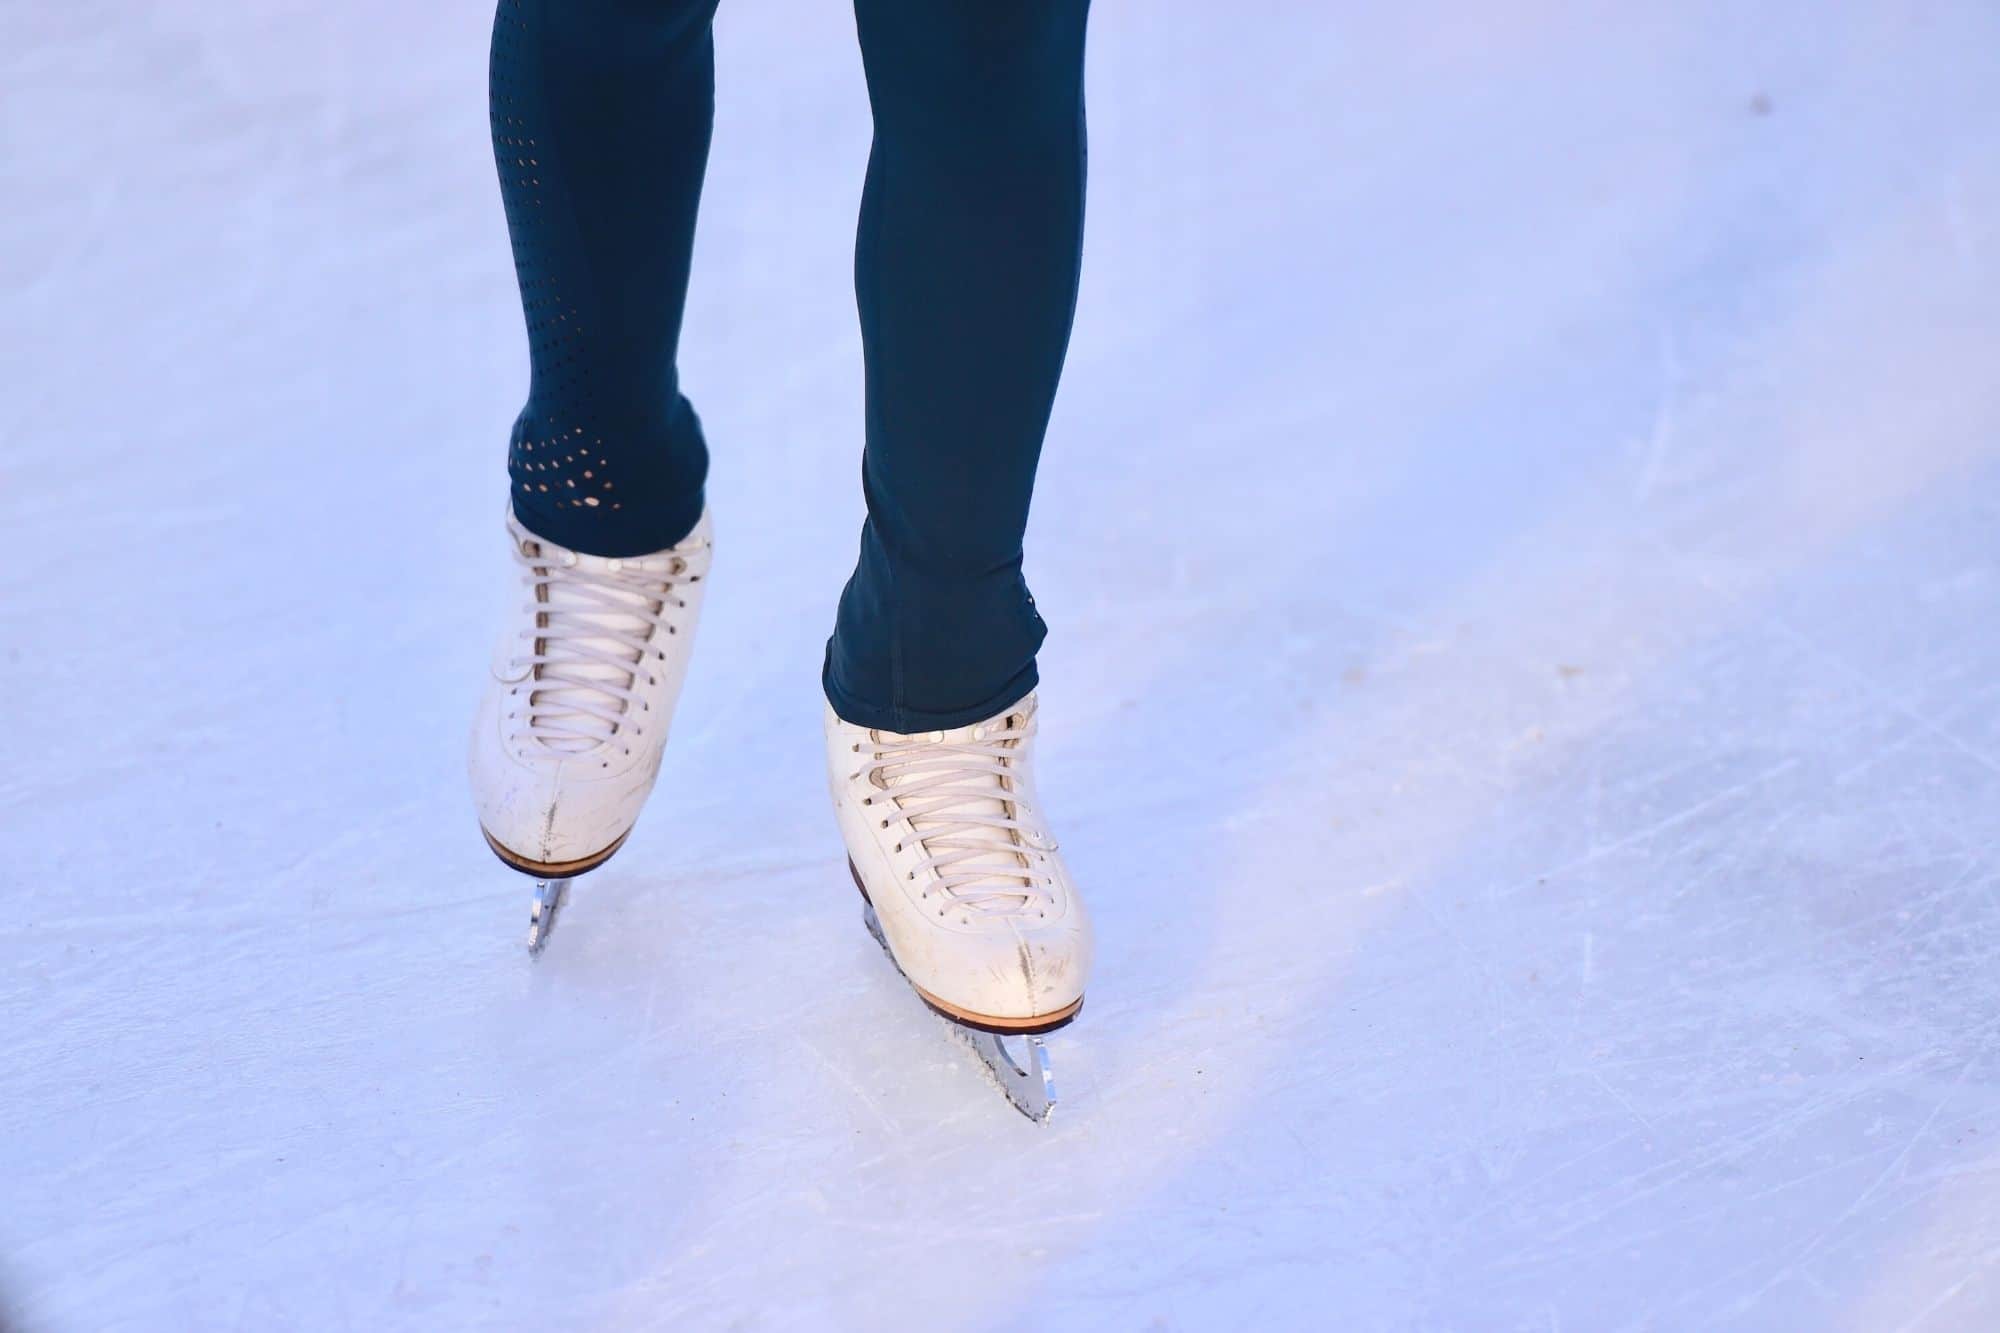 Girls skates on ice